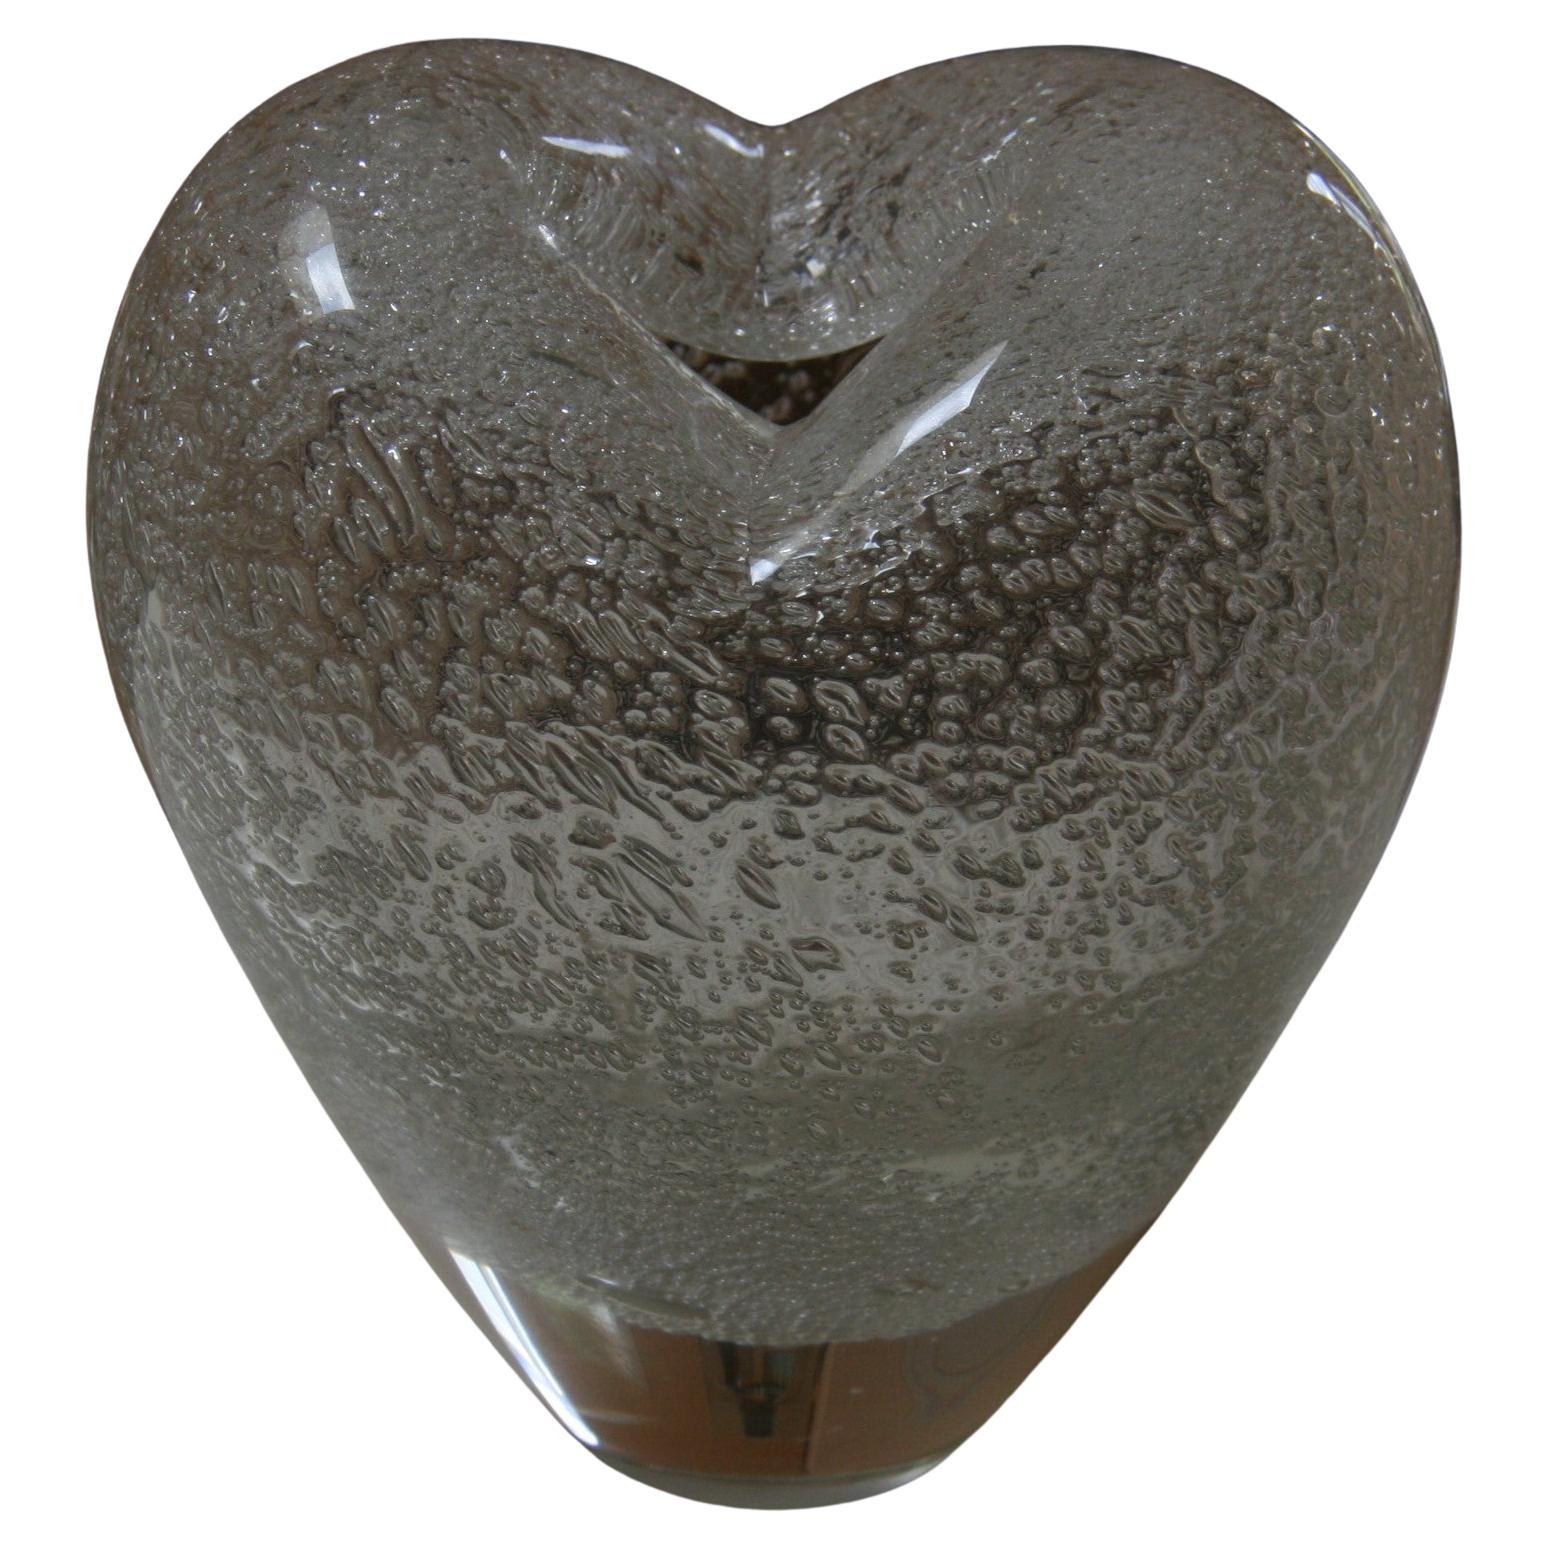  Seguso Murano Heart Shaped Vase/Sculpture For Sale